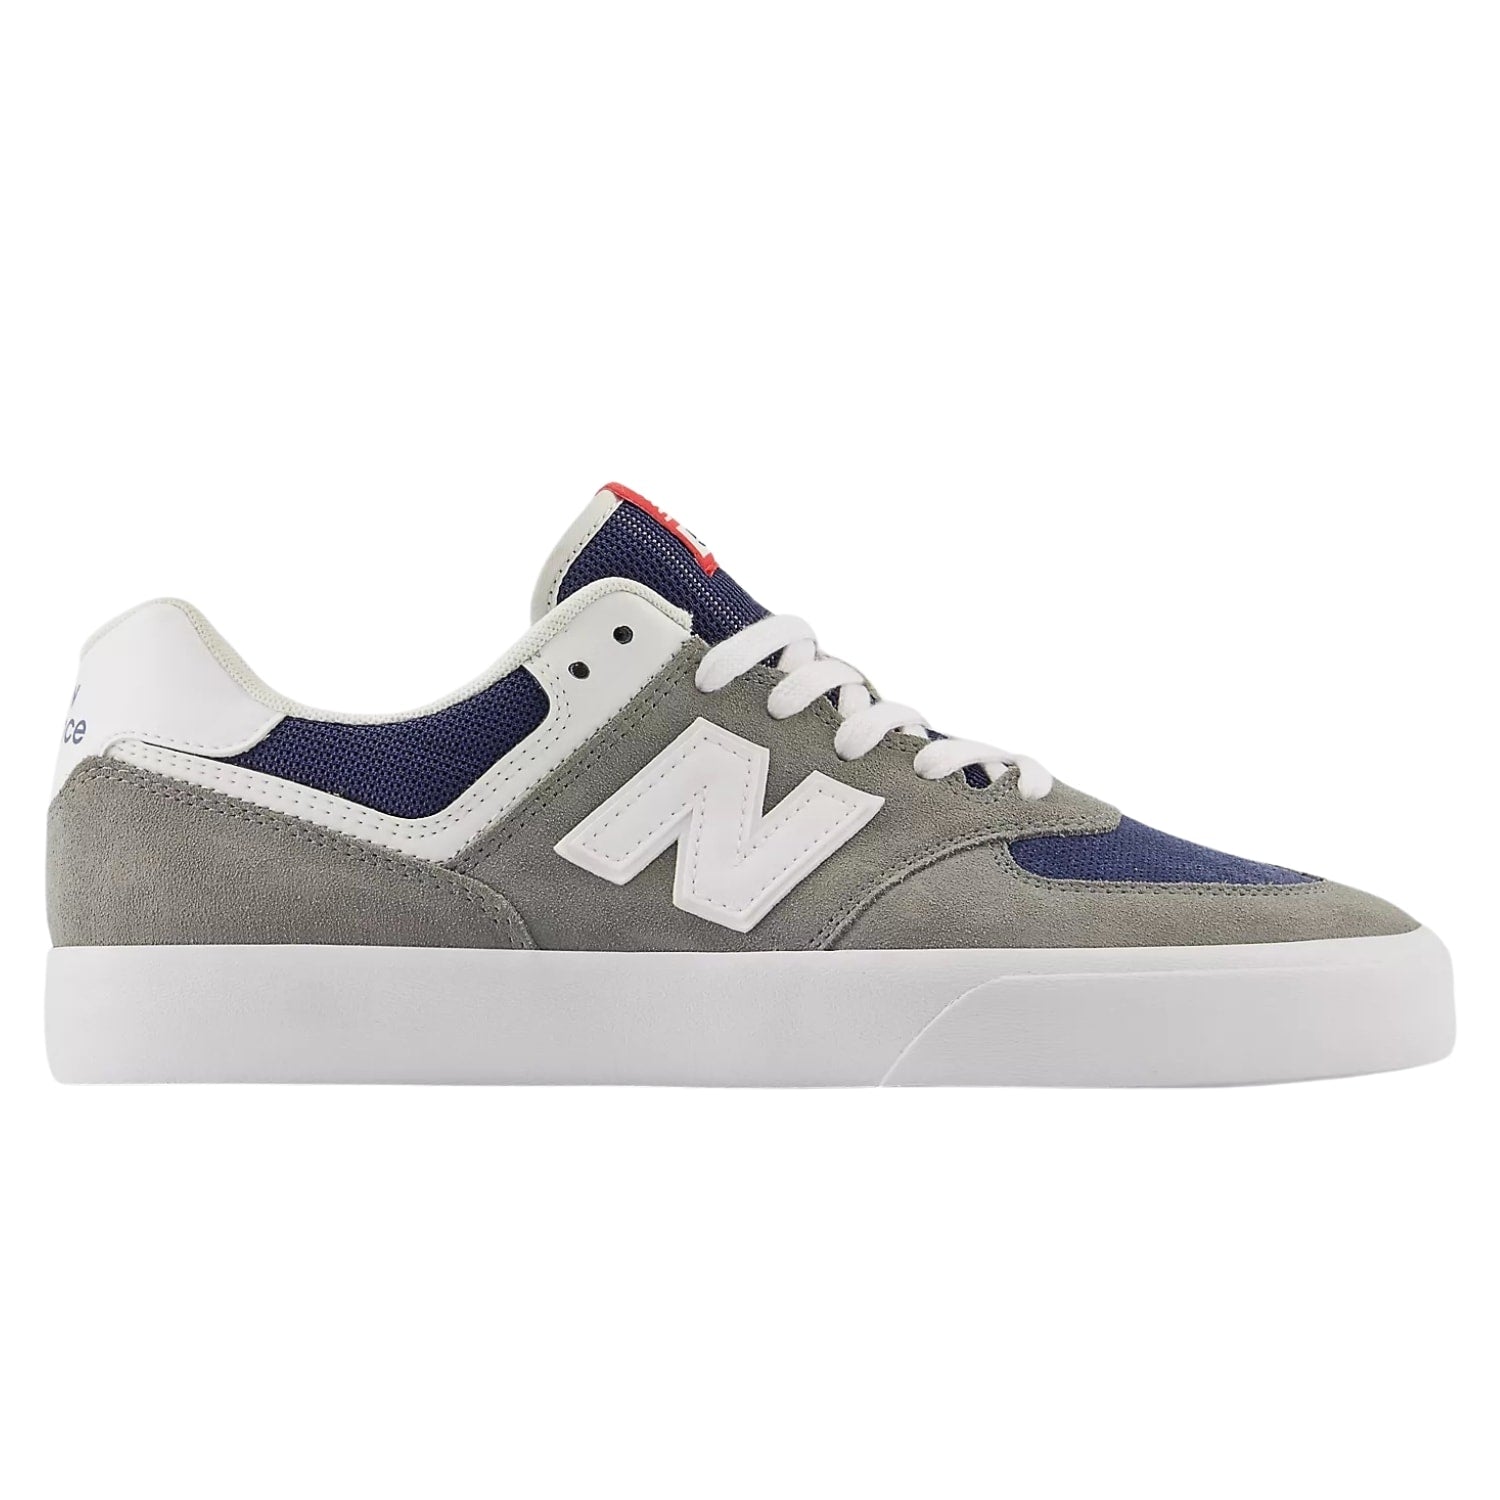 New Balance Numeric Nm574 Skate Shoes - Grey/White - Mens Skate Shoes by New Balance Numeric